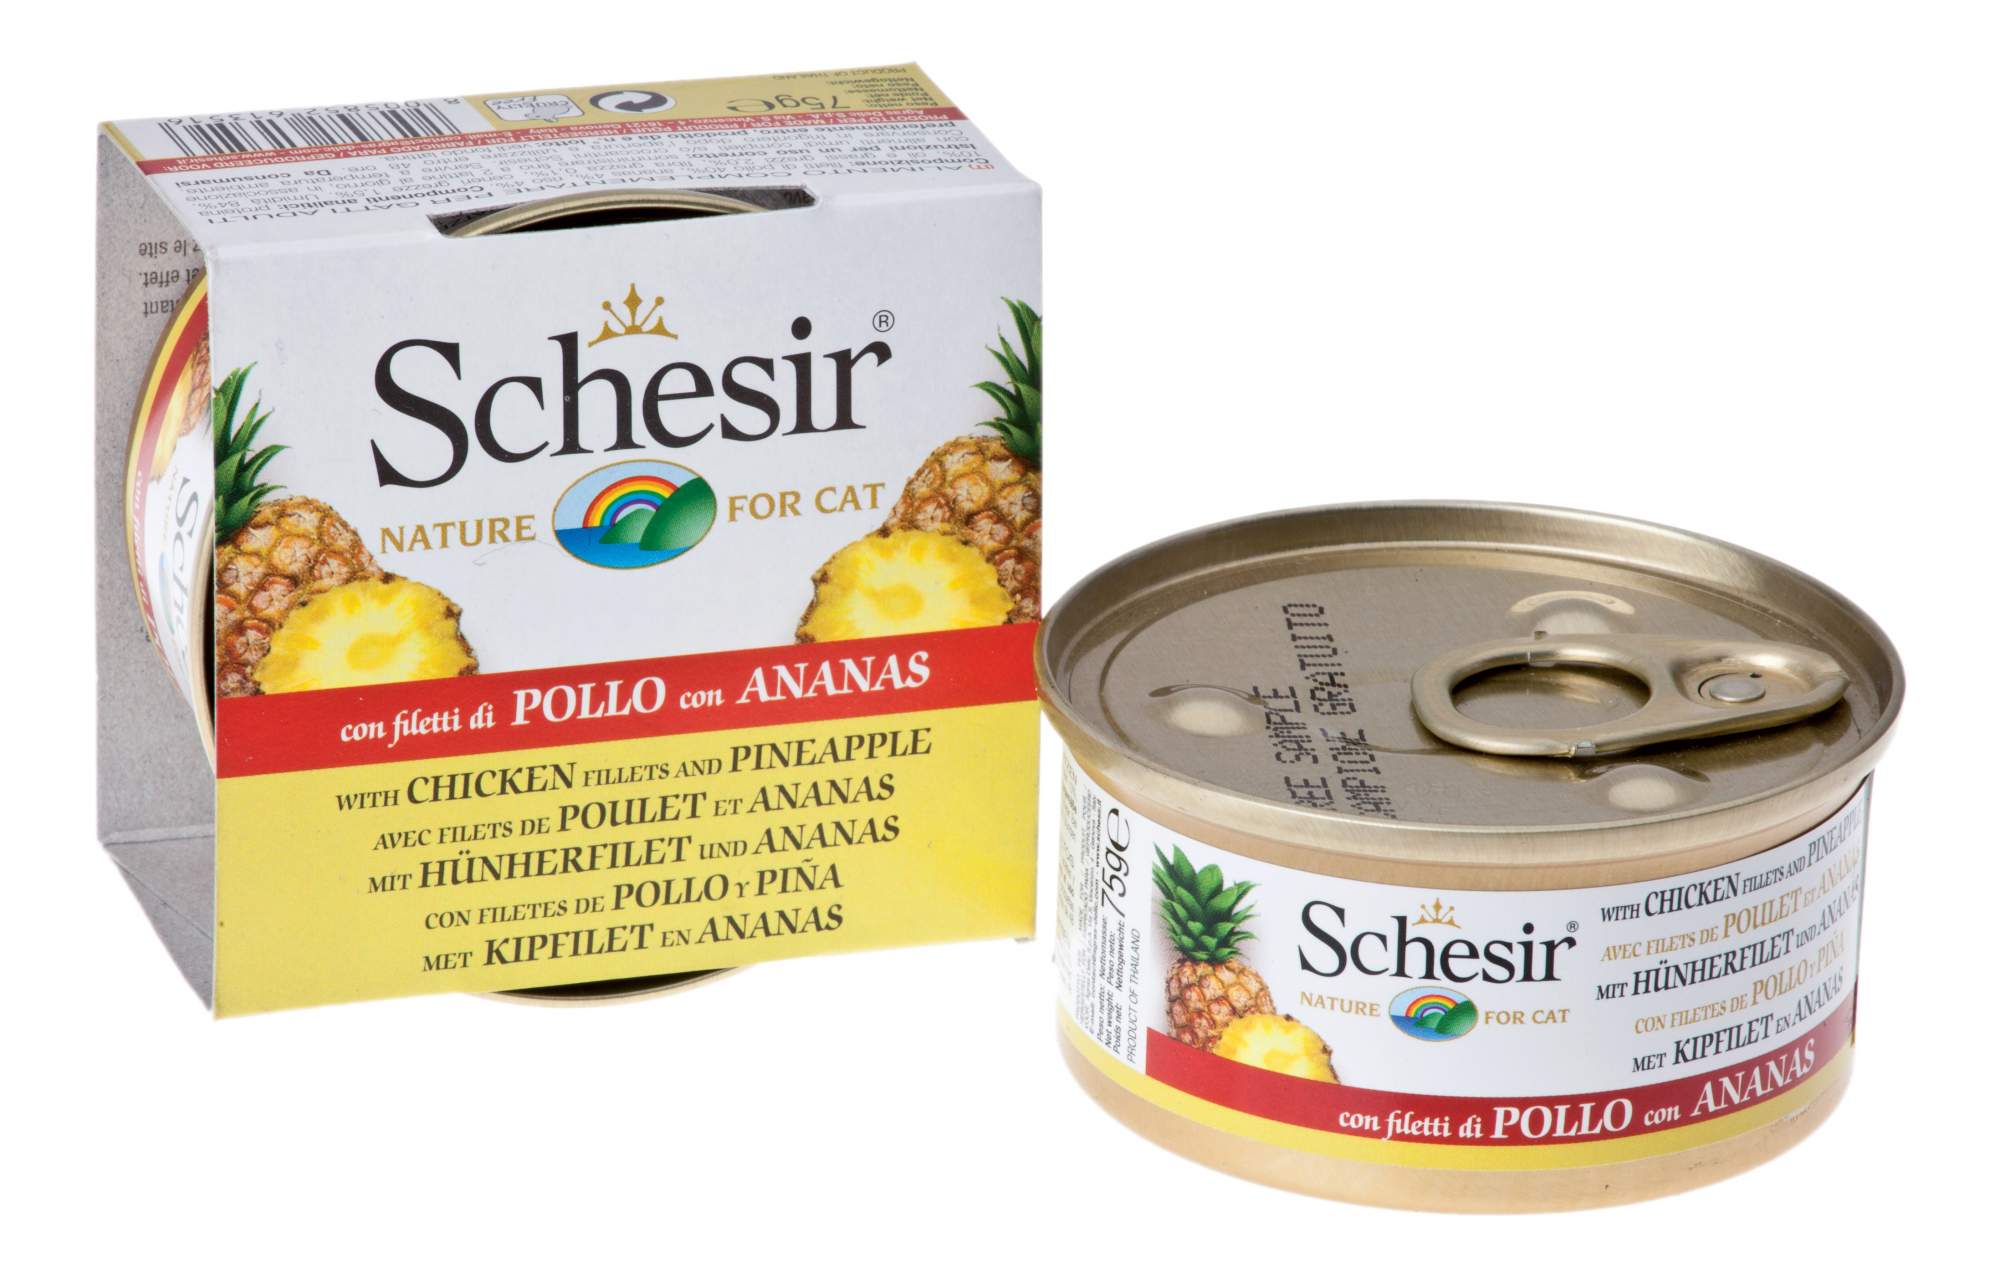 Schesir Chicken Pineapple - консервы Шезир курица с ананасом для кошек, банка (75 г)